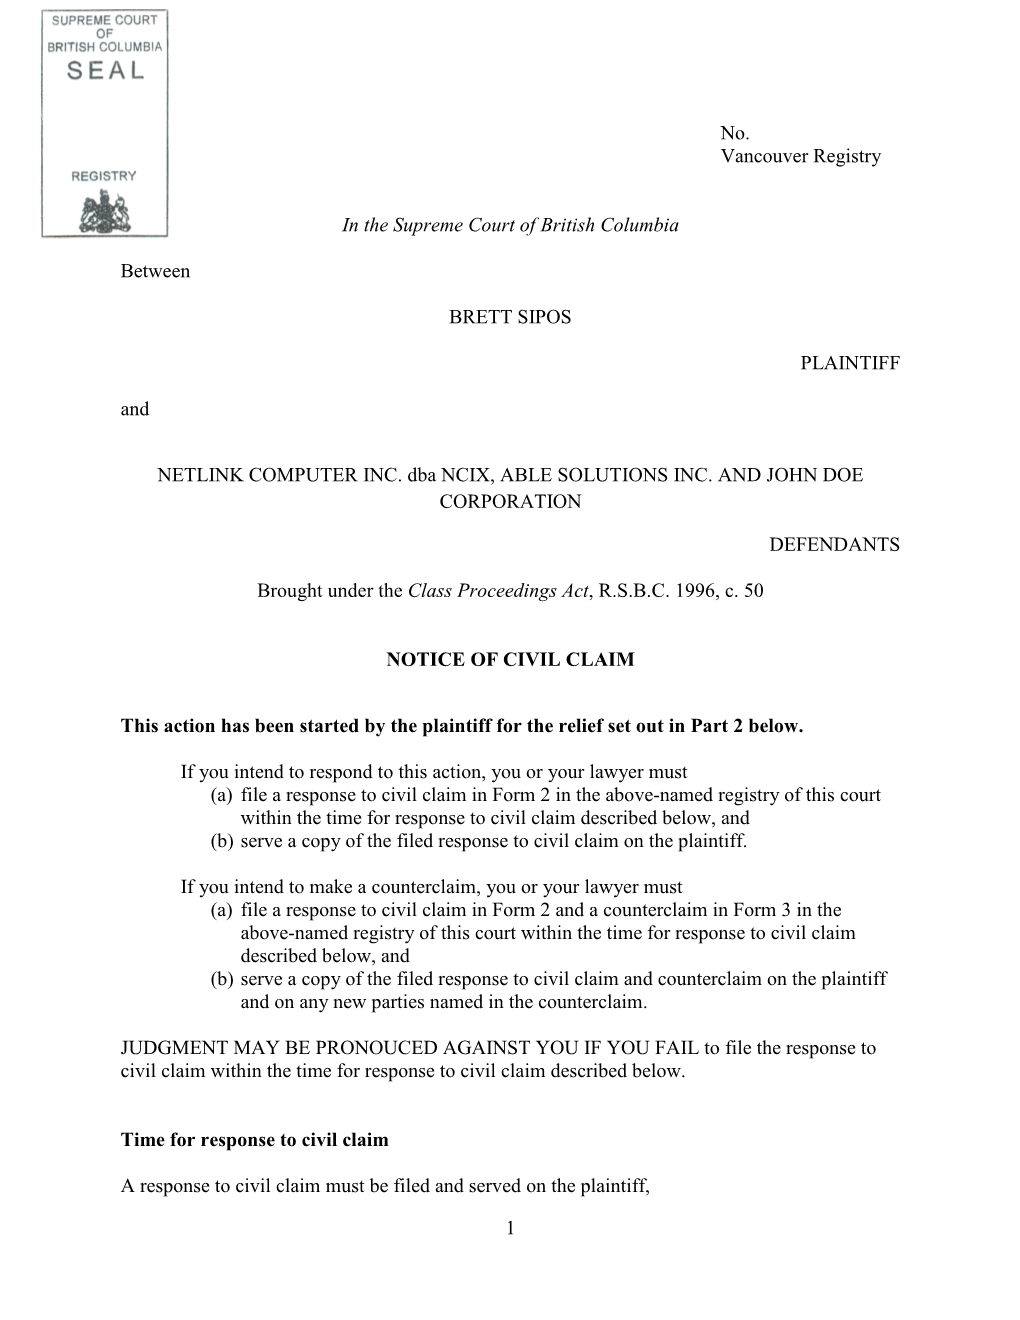 Notice of Civil Claim – Employee